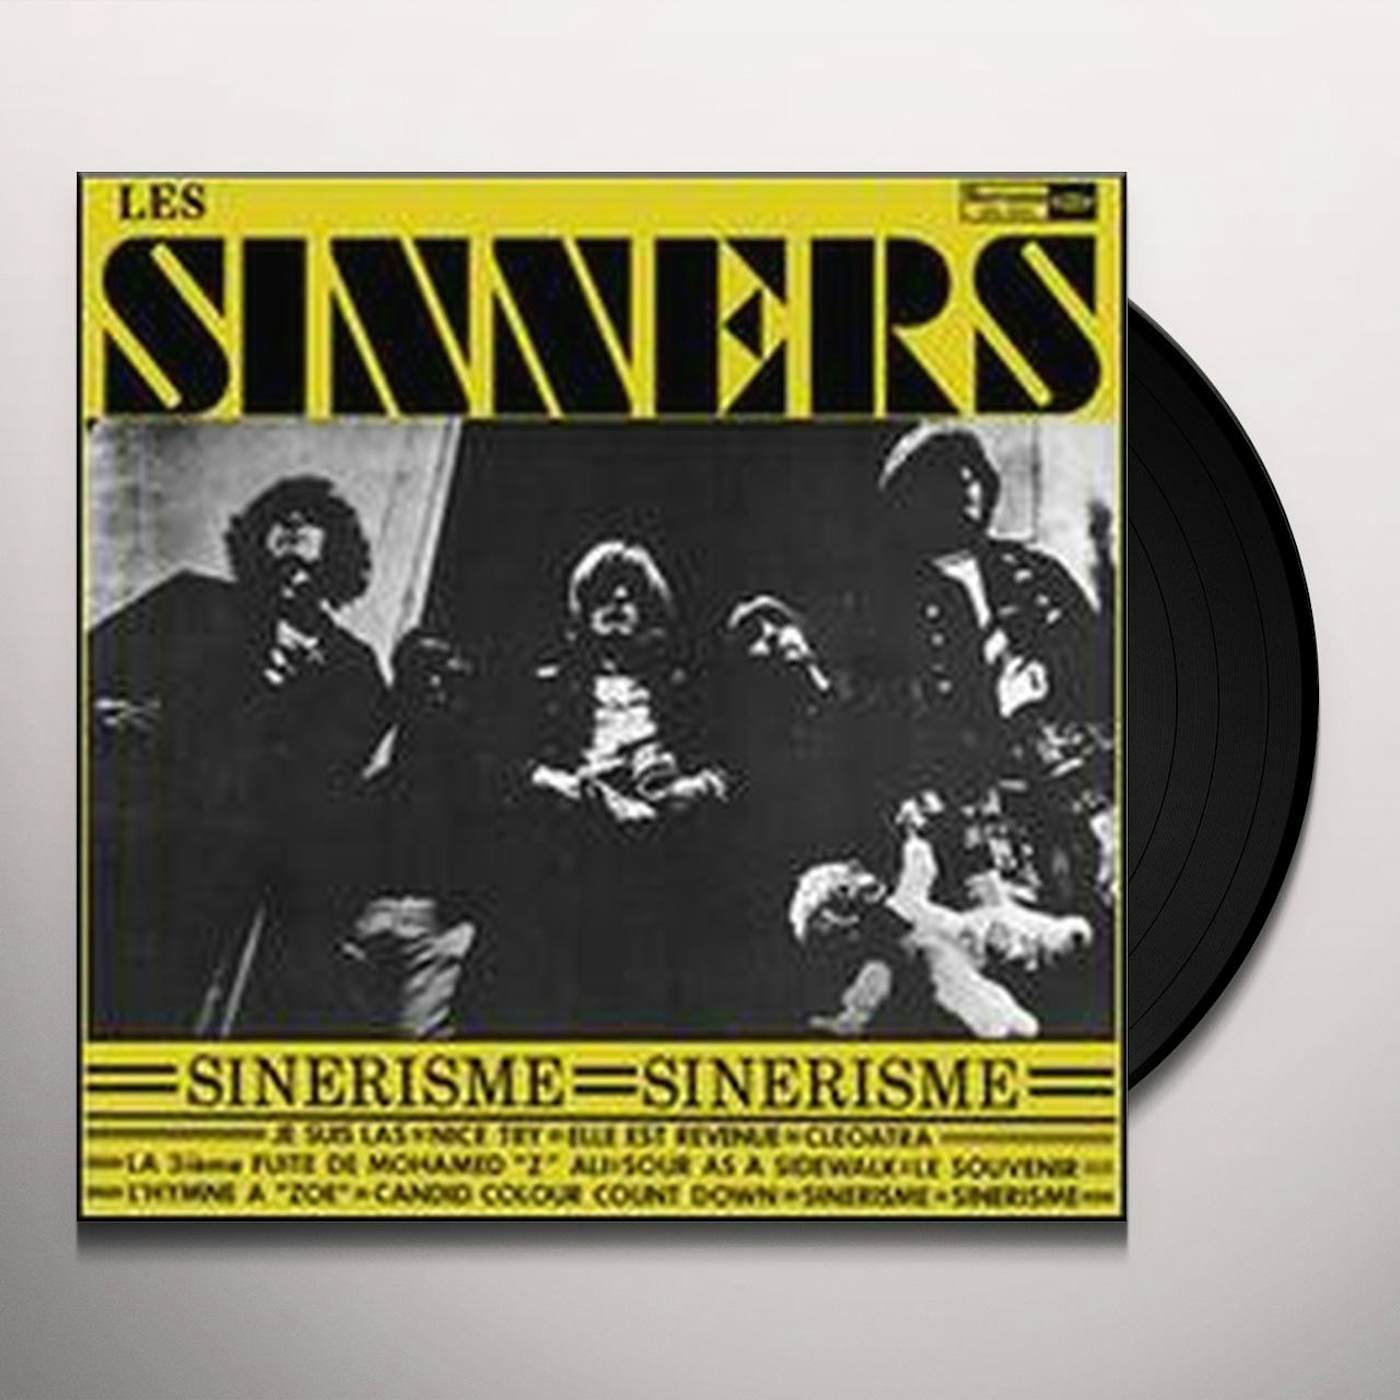 Les Sinners Sinerisme Vinyl Record